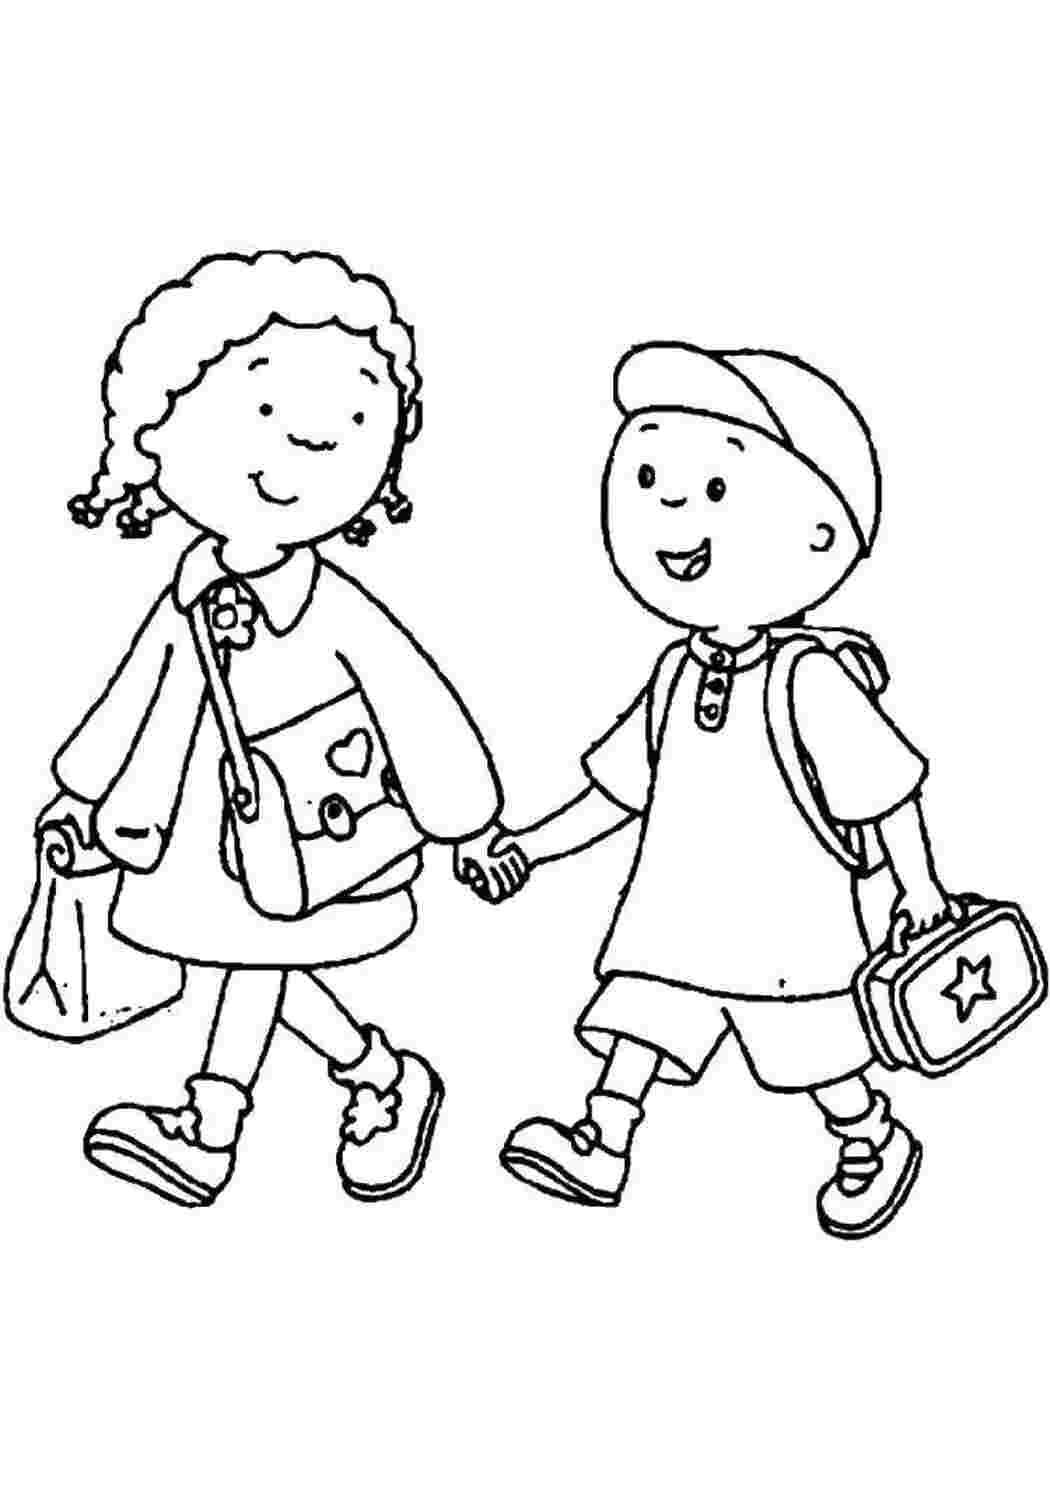 Раскраски Мальчик и девочка идут в школу школа школа, дети